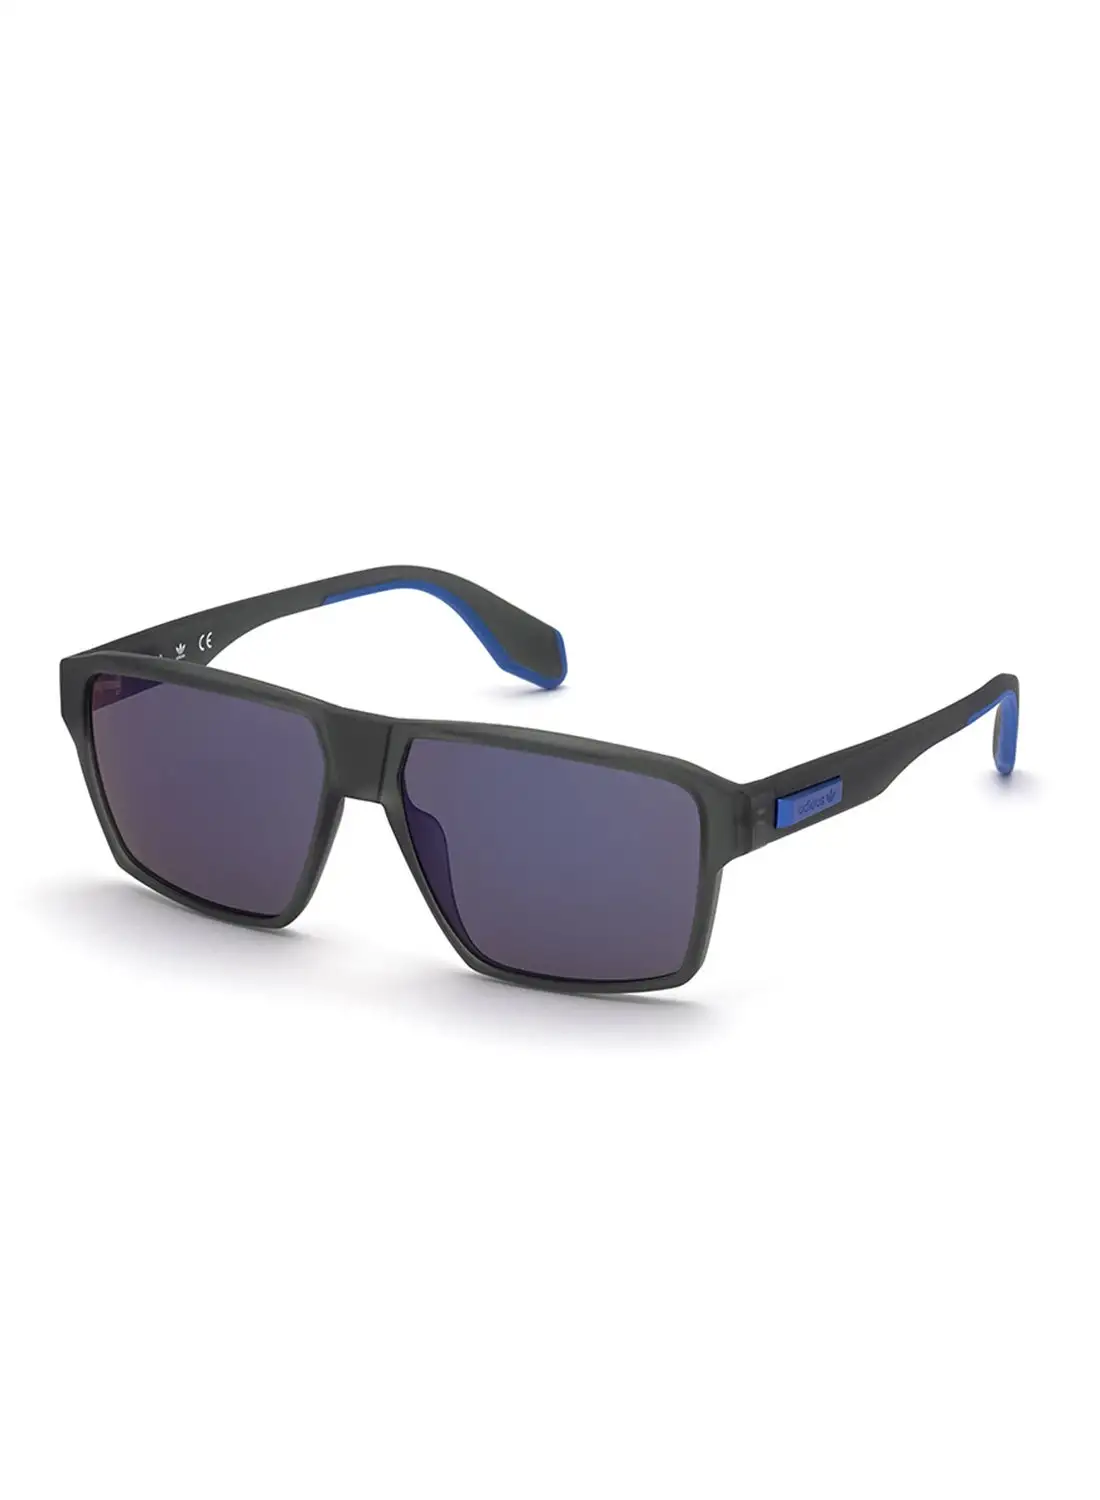 Adidas Men's UV Protection Asymmetrical Shape Sunglasses - OR003920X58 - Lens Size: 58 Mm